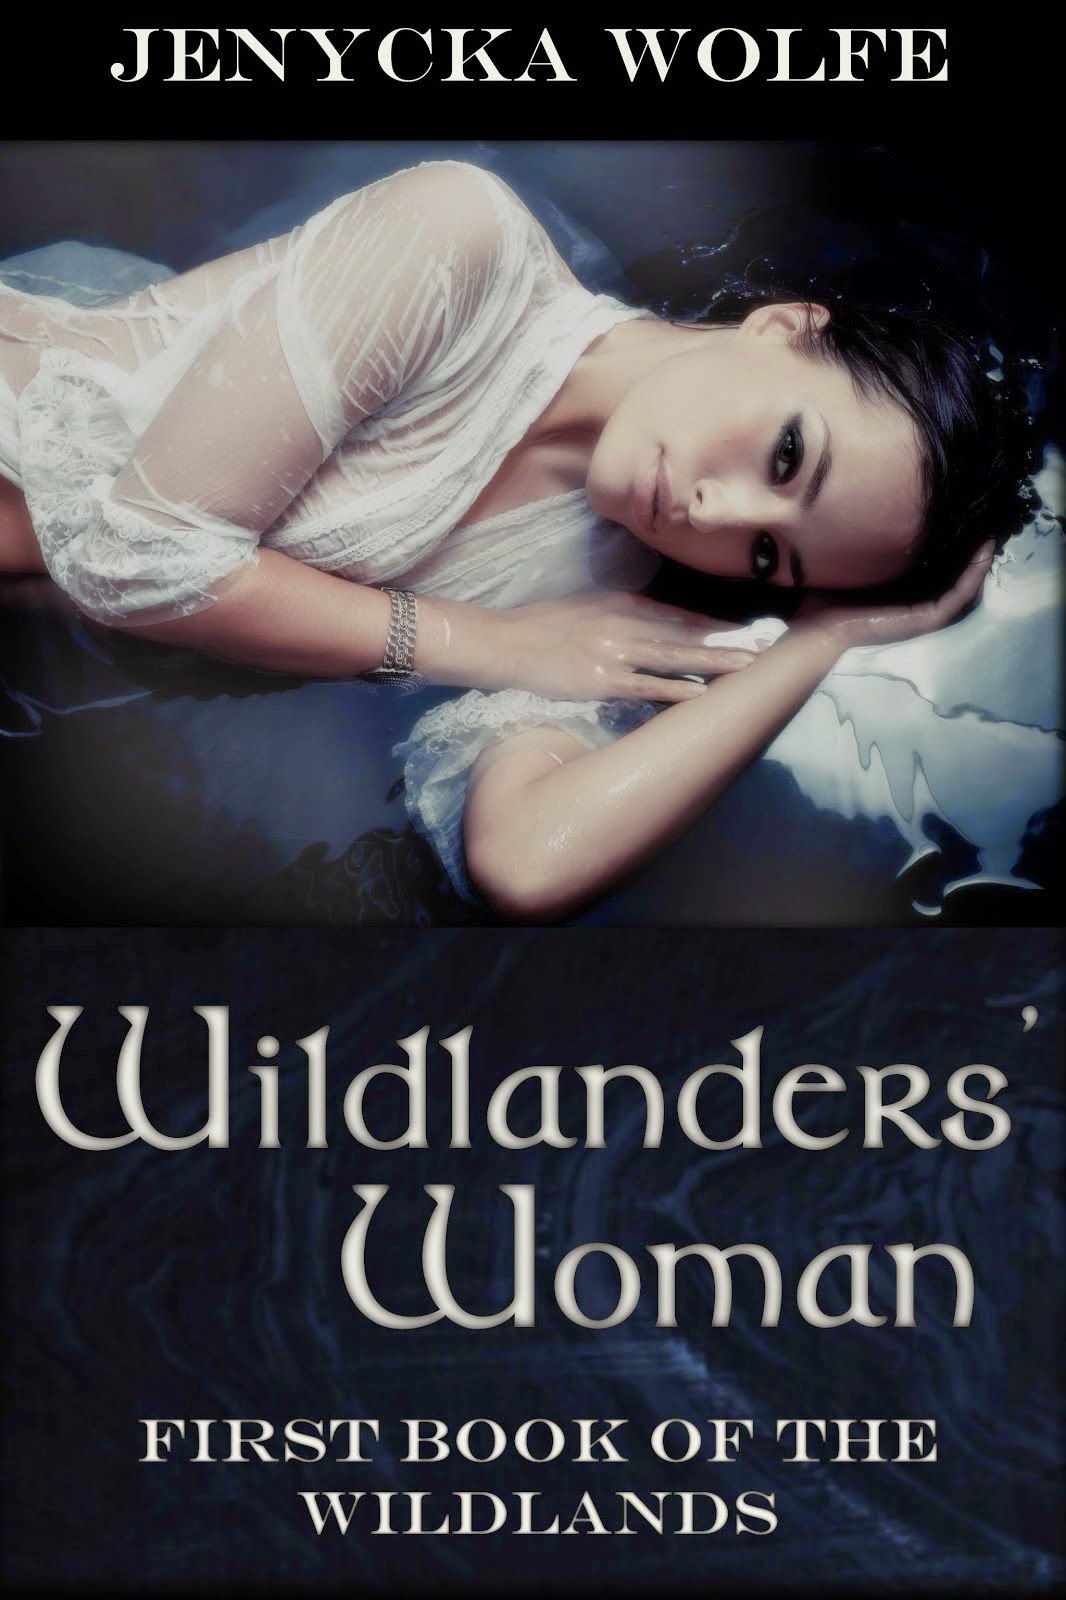 Wildlanders' Woman: First Book of the Wildlands